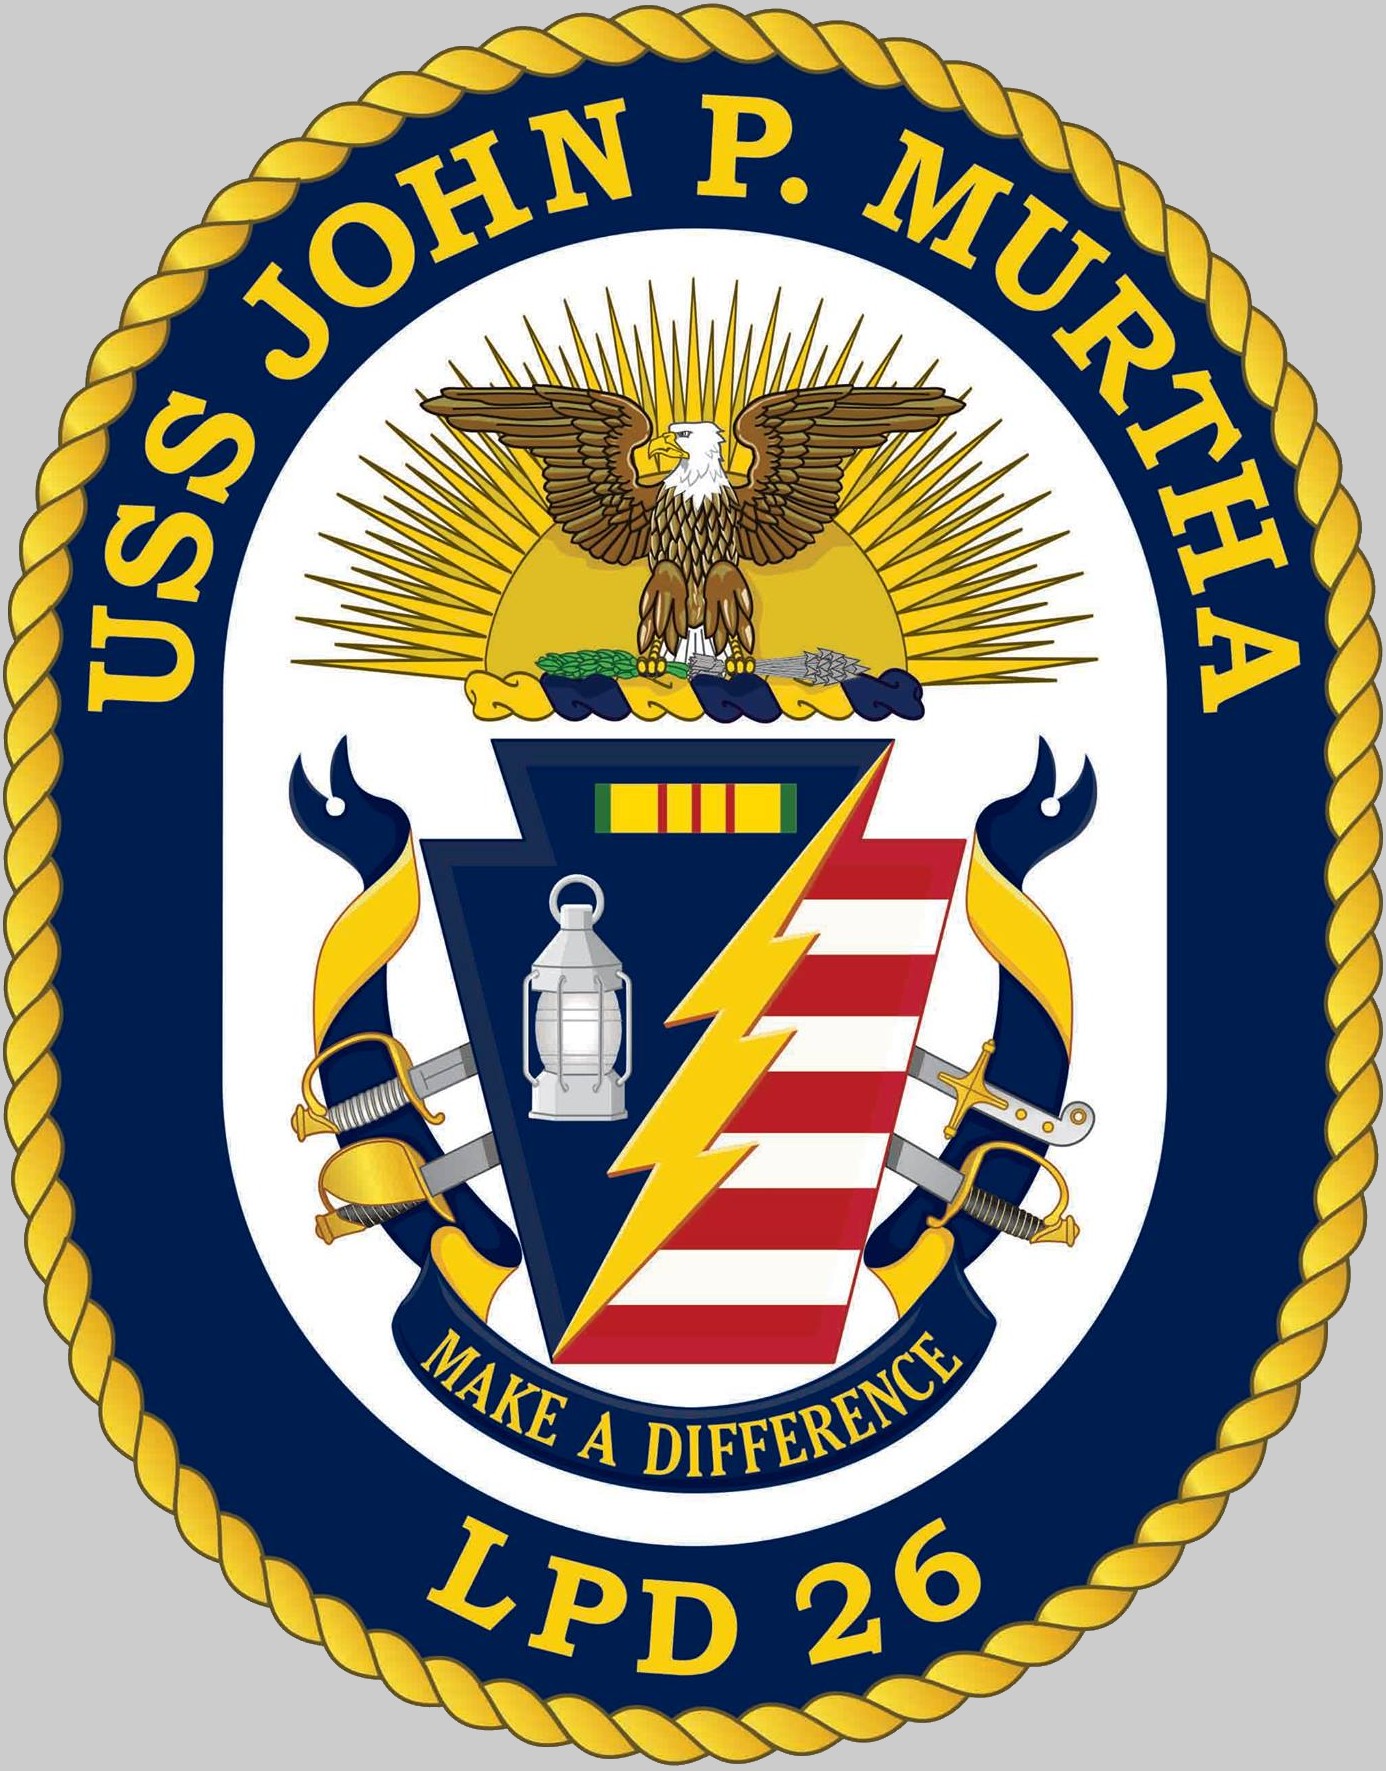 lpd-26 uss john p. murtha insignia crest patch badge amphibious transport dock ship navy 02c